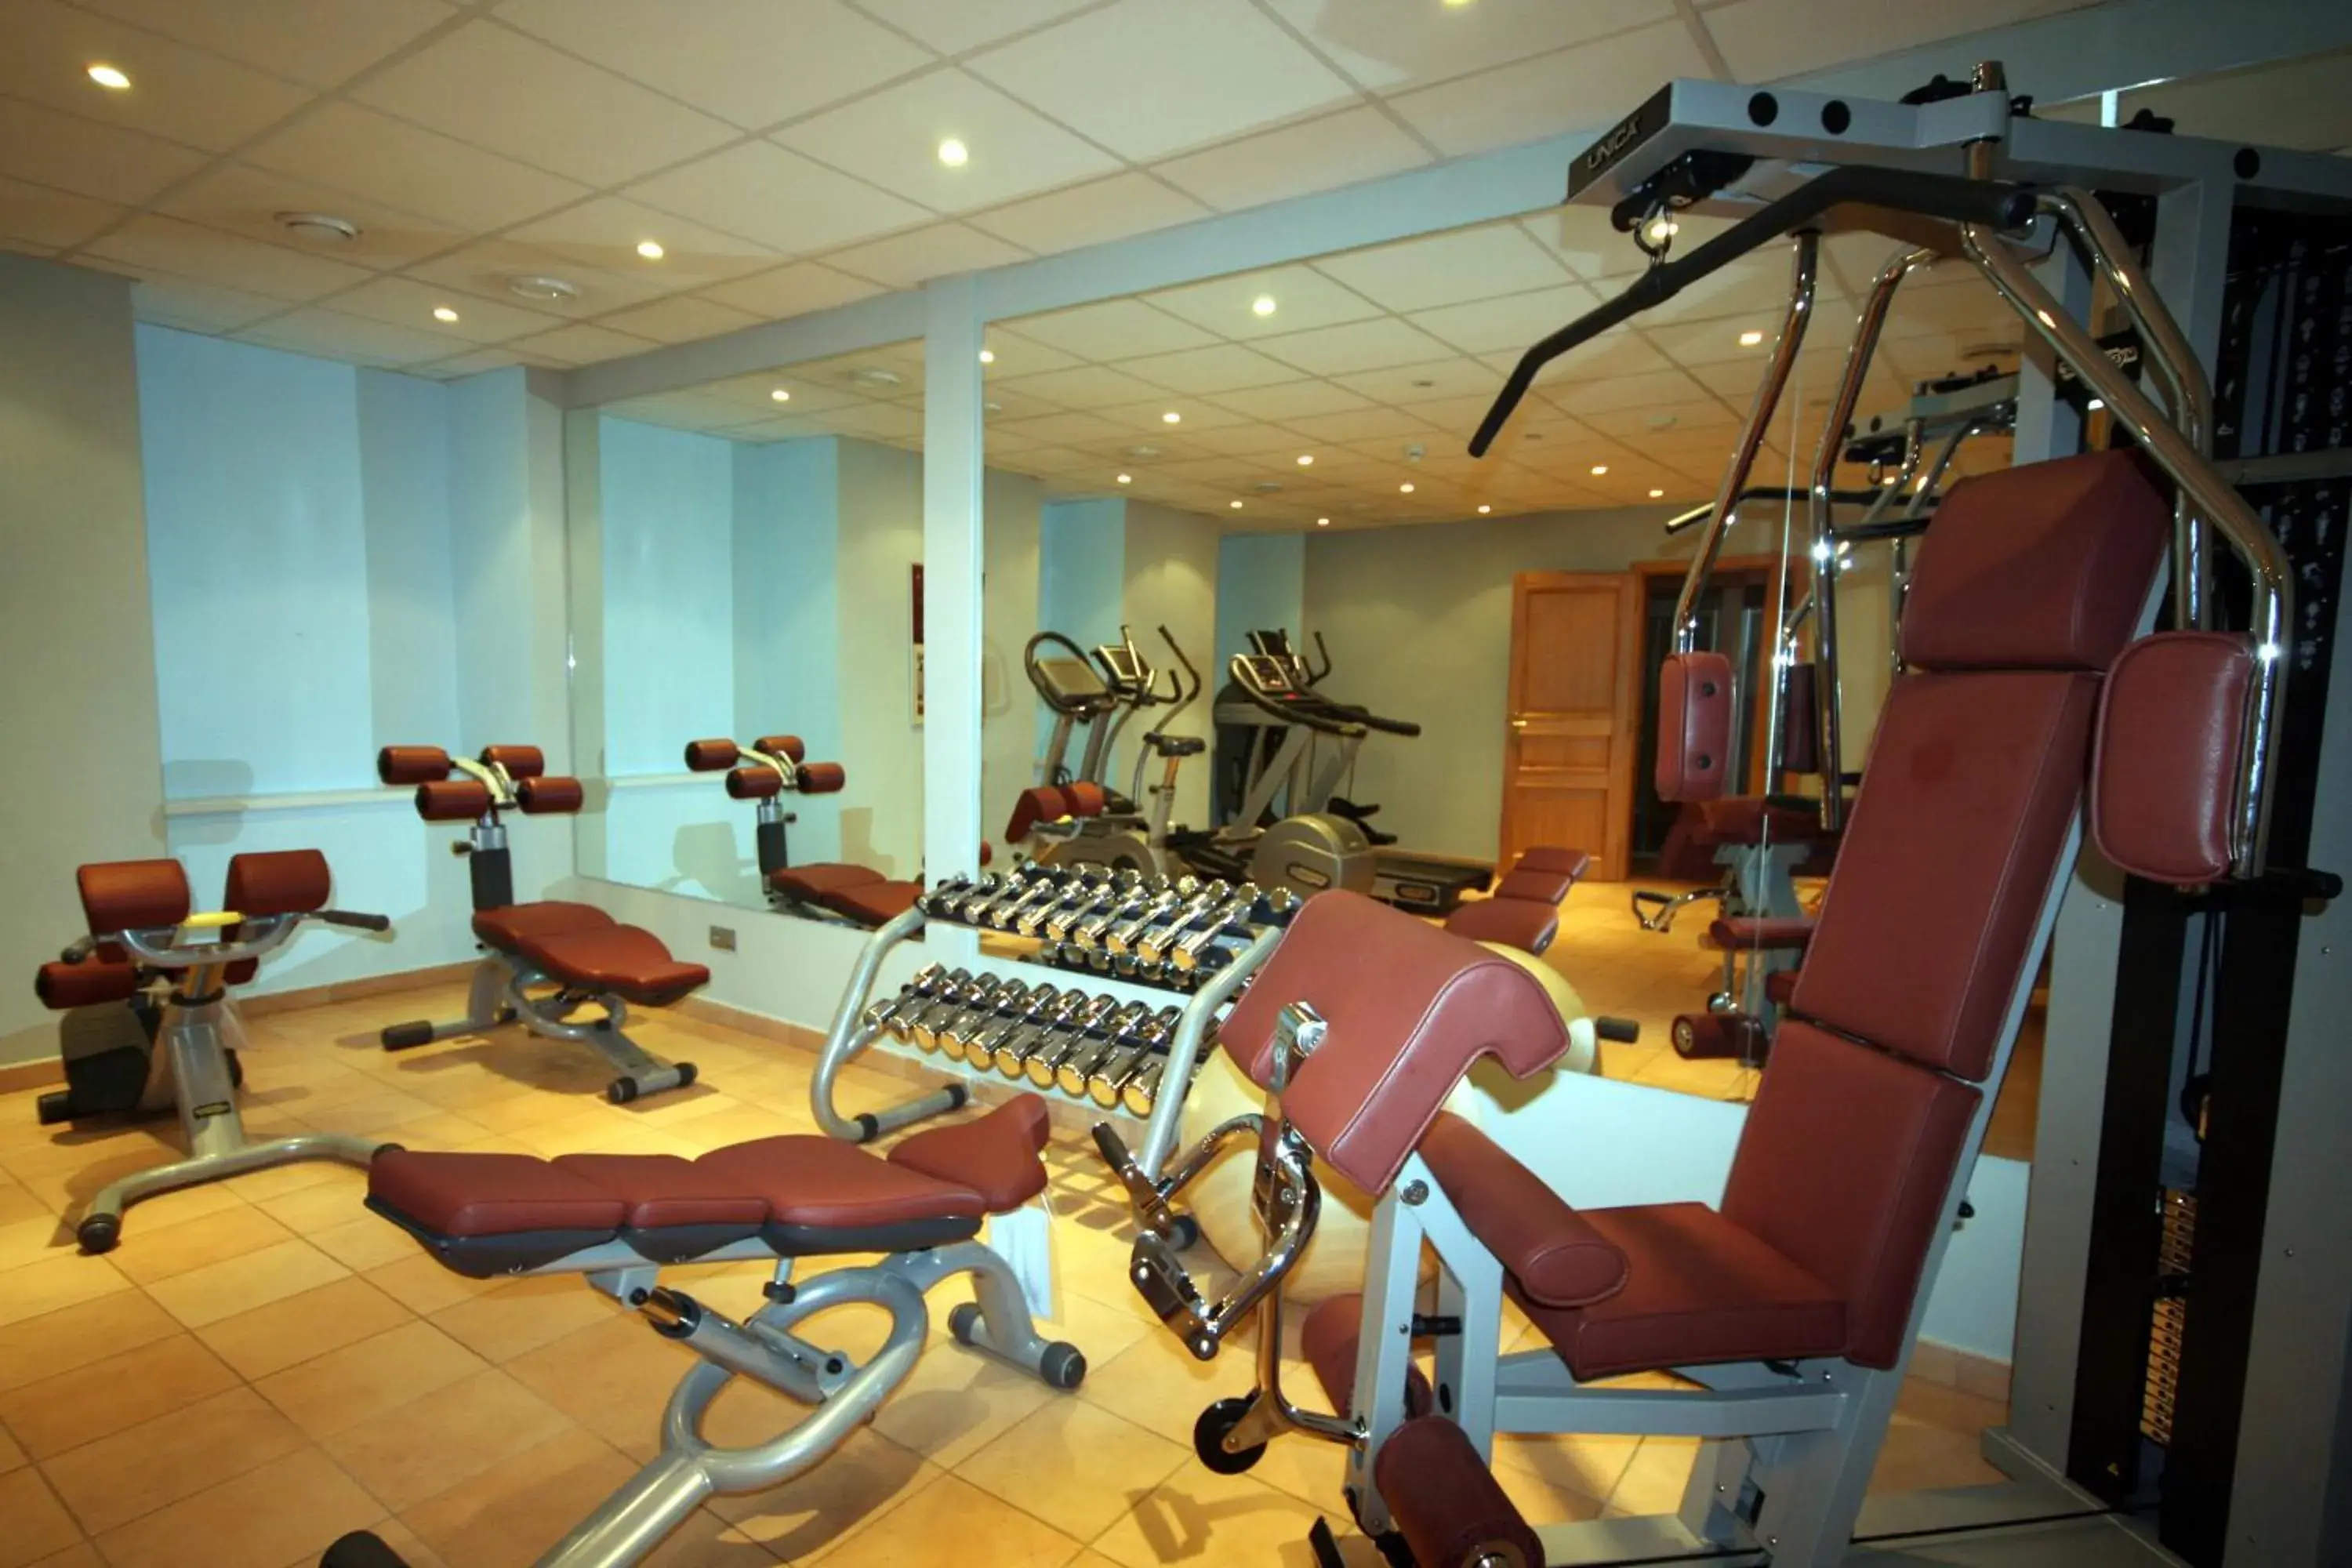 Fitness centre/facilities, Fitness Center/Facilities in Hotel Caesar Prague